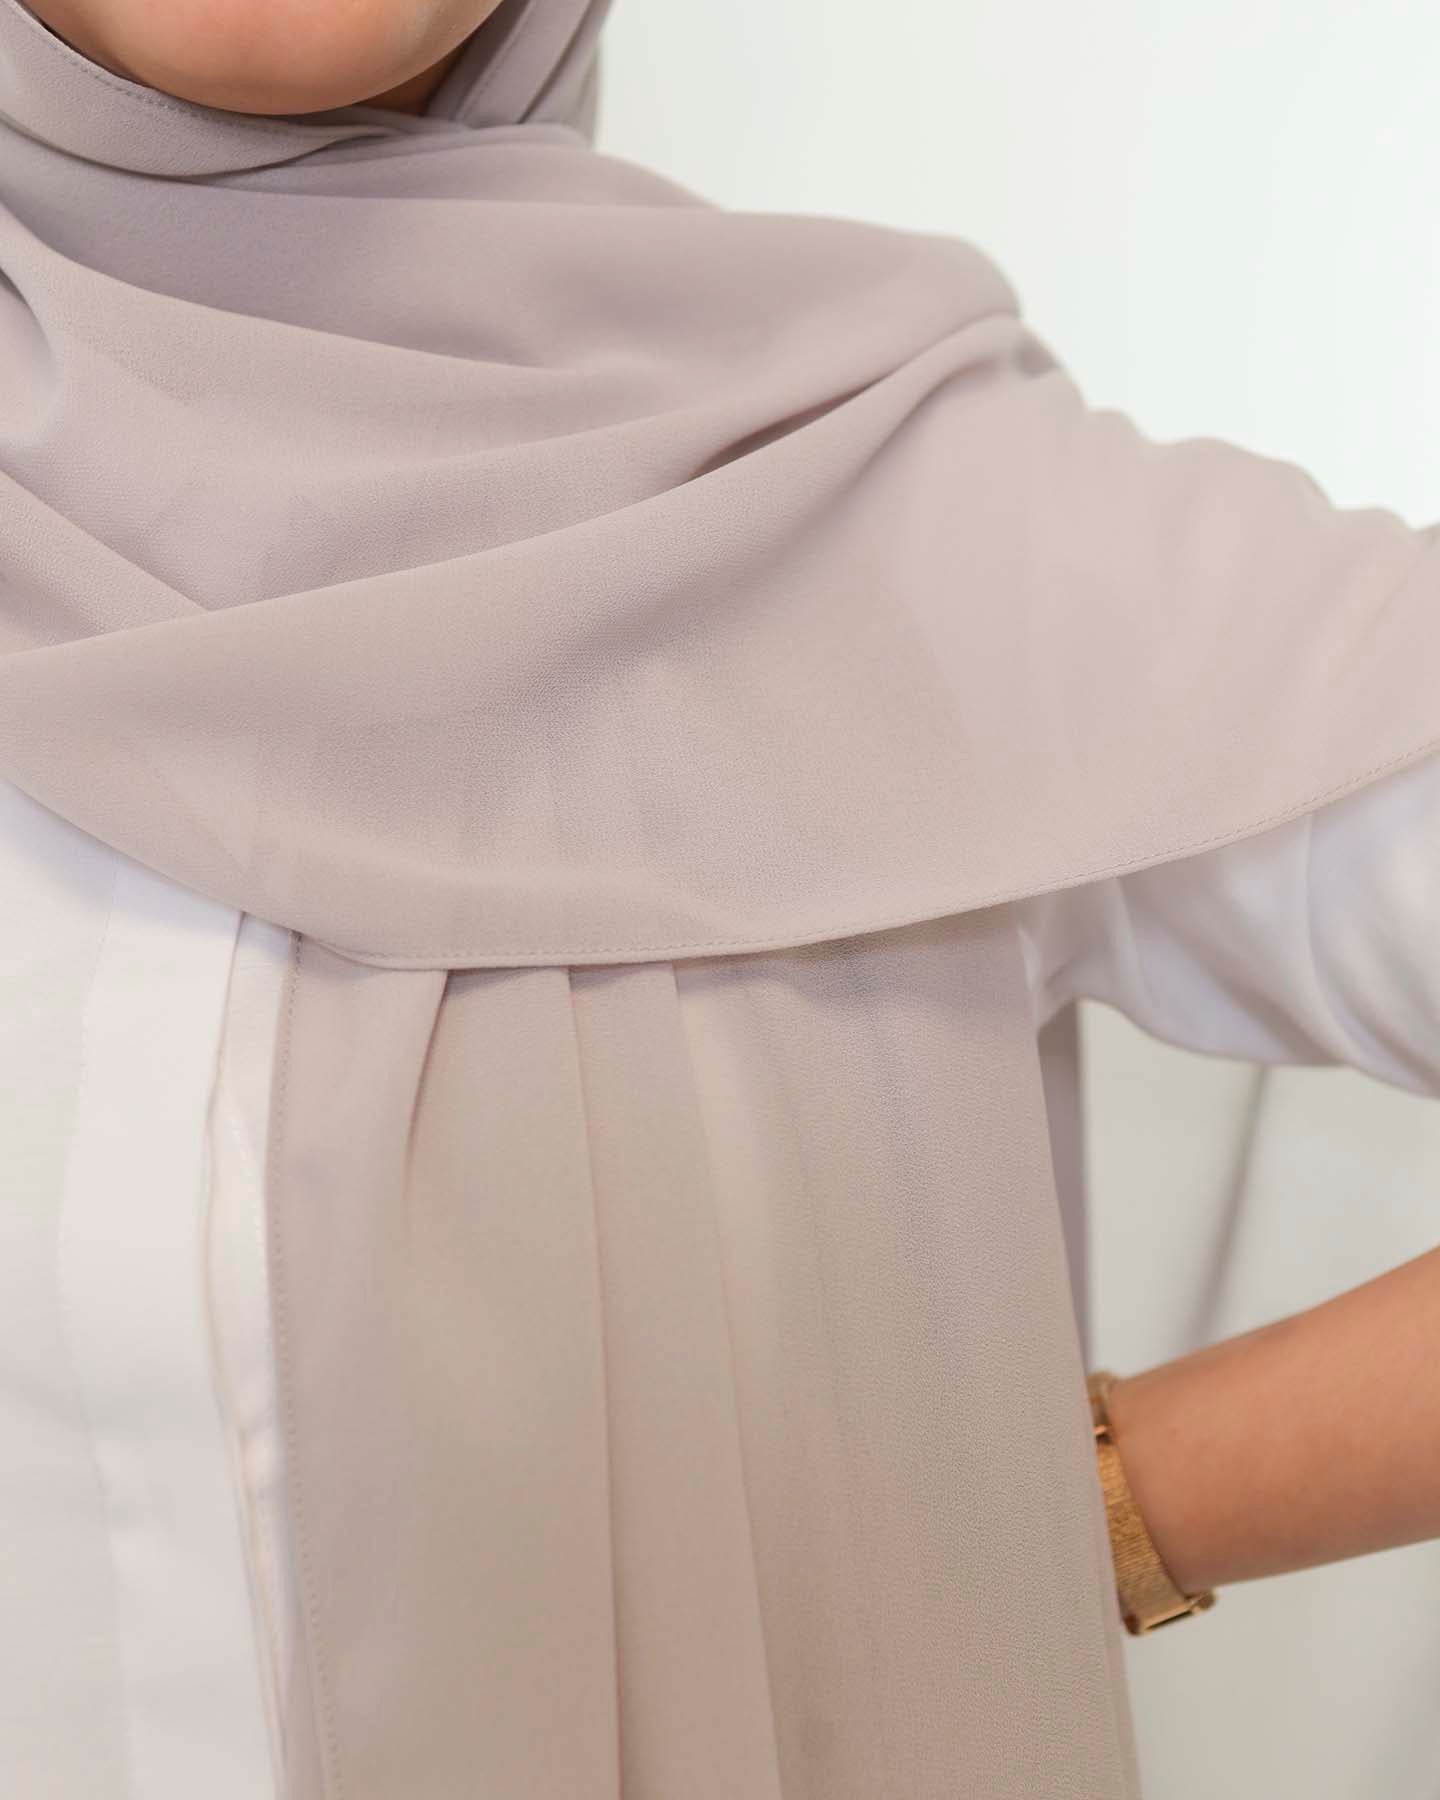 Premium Chiffon Hijab - Light Gray